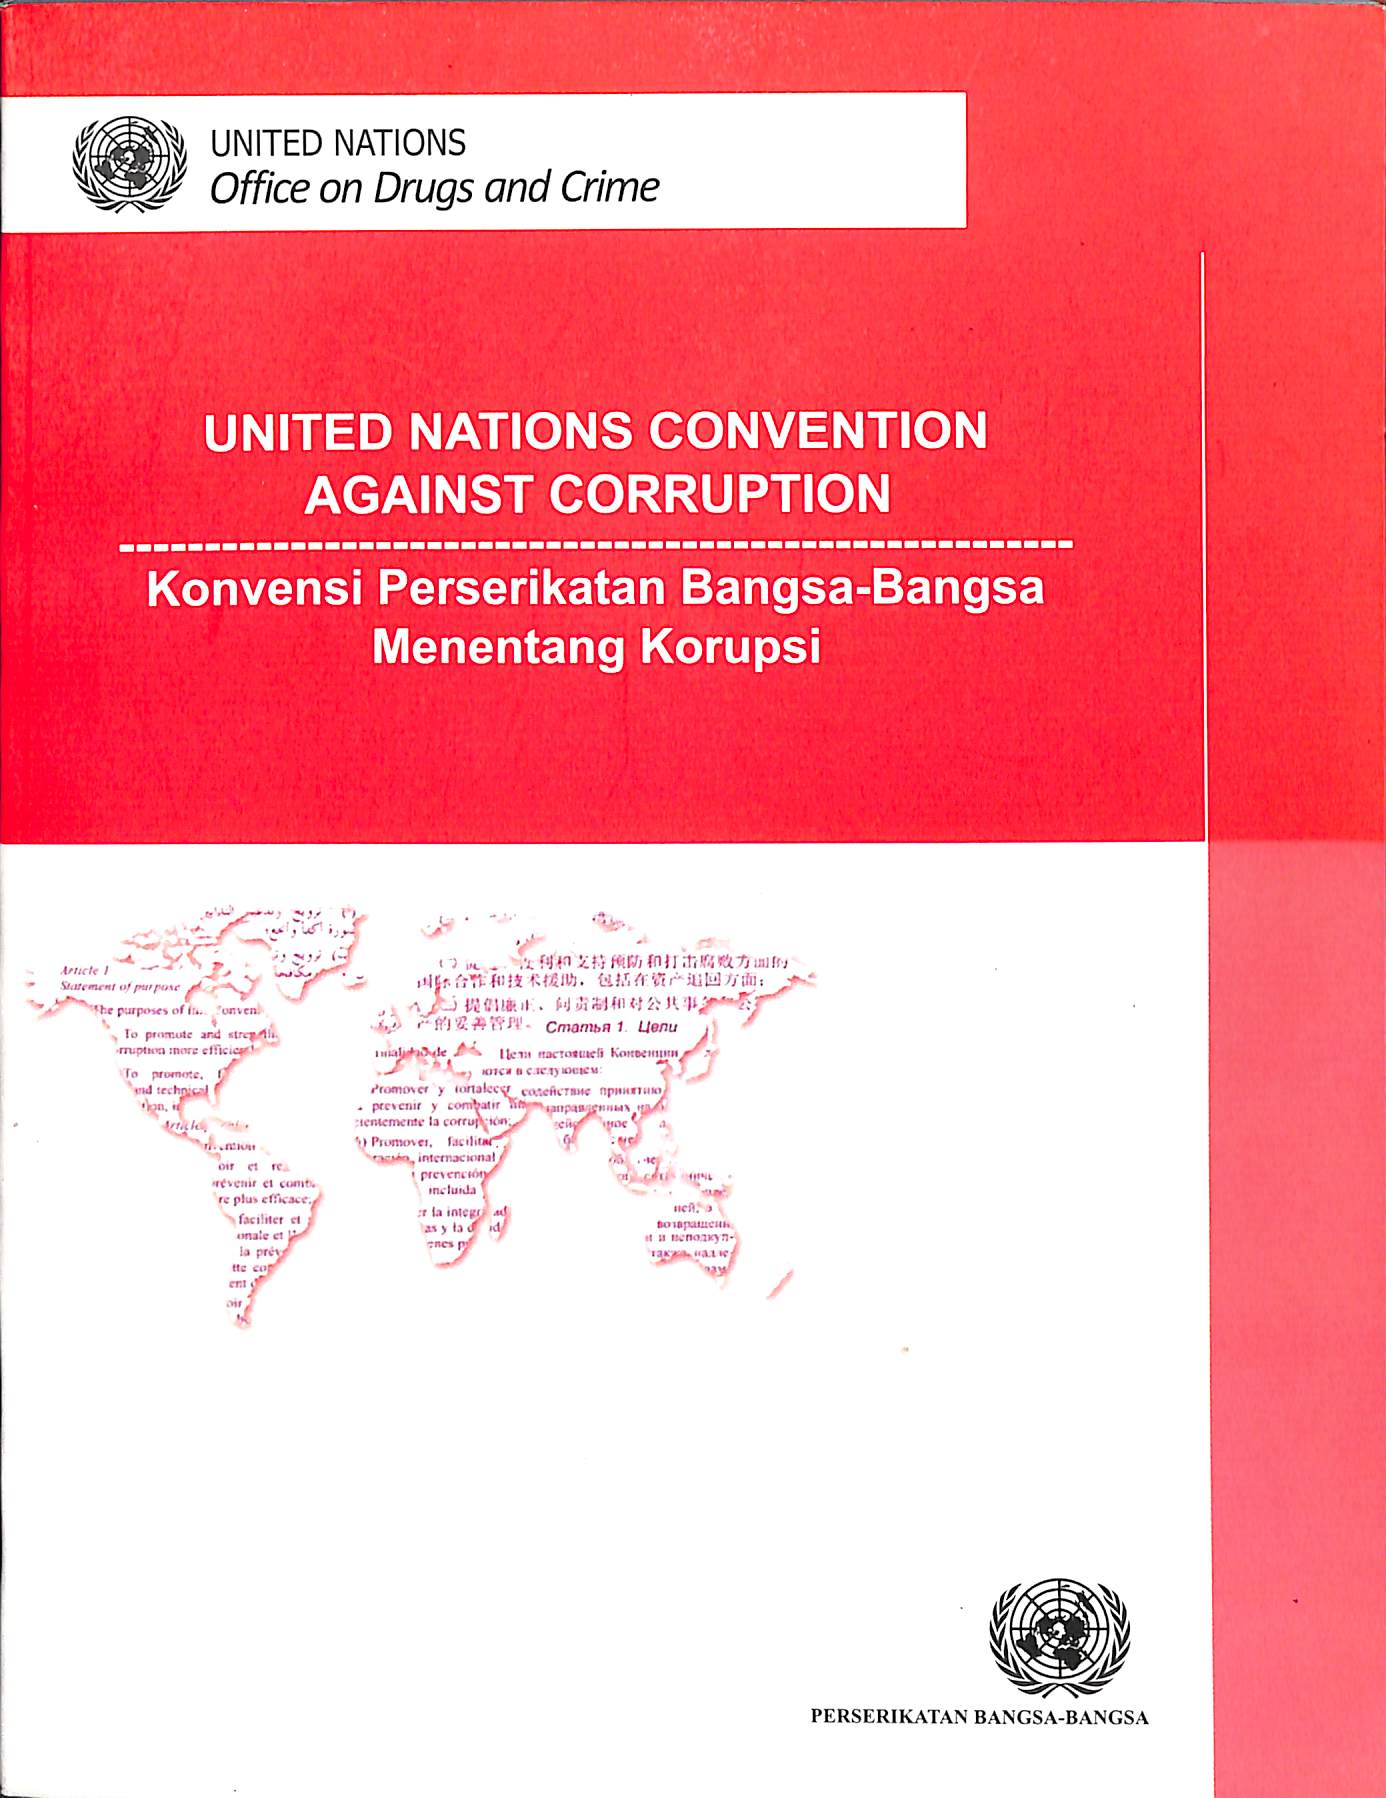 Konvensi Perserikatan Bangsa-Bangsa menentang korupsi